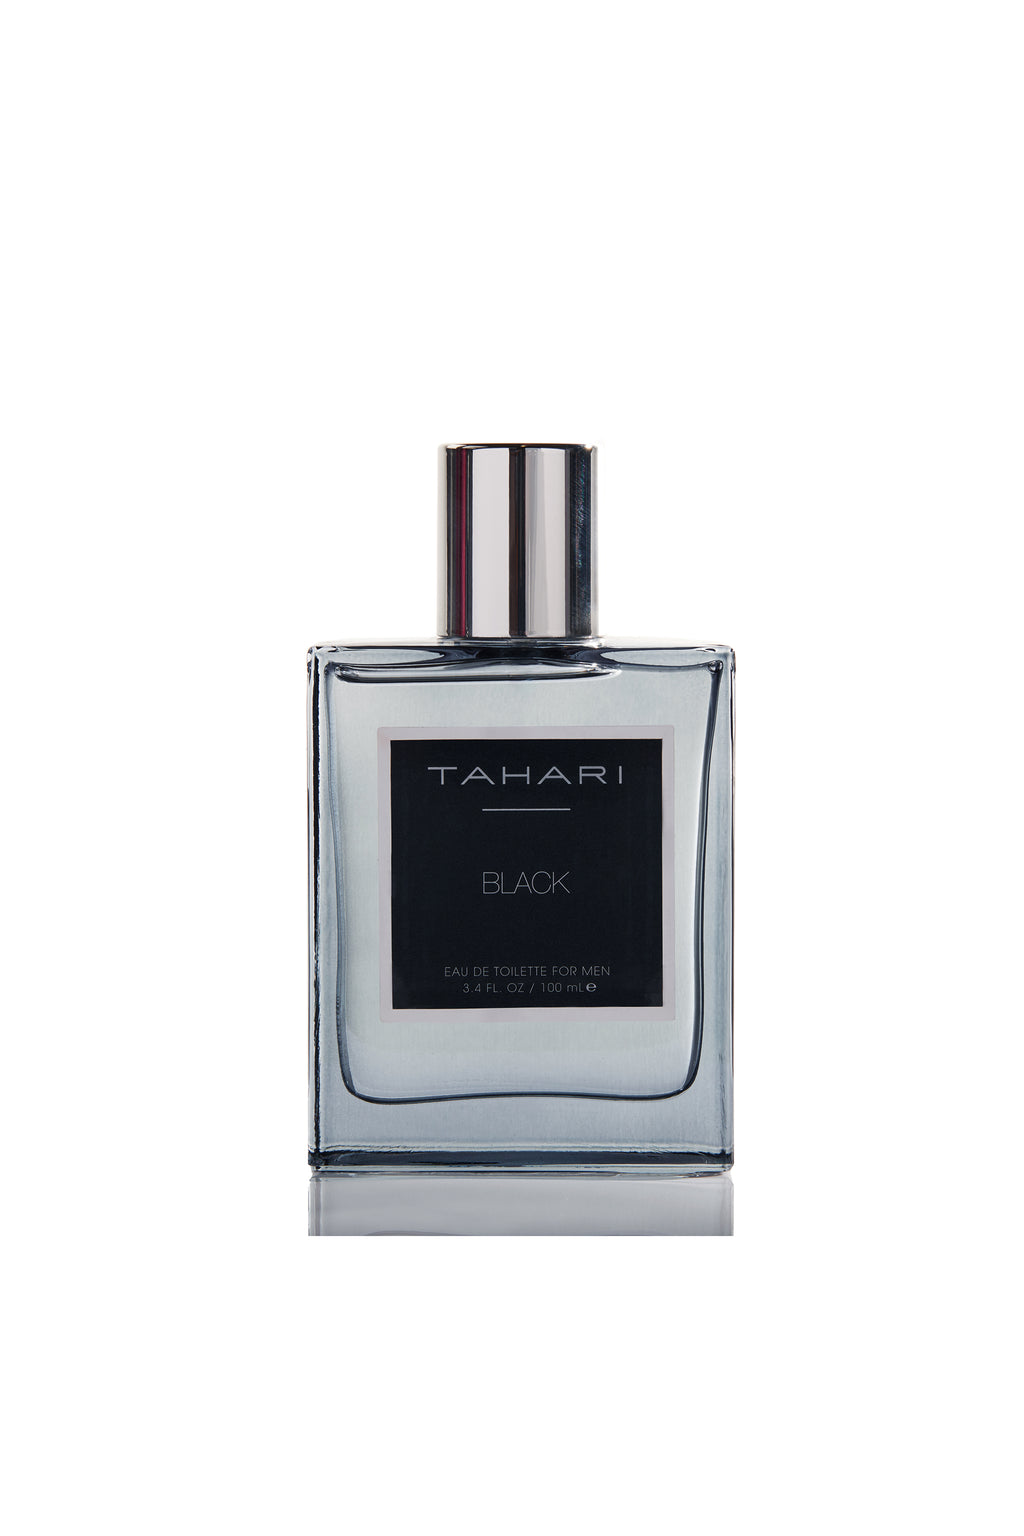 Eclat for Men Oriflame cologne - a fragrance for men